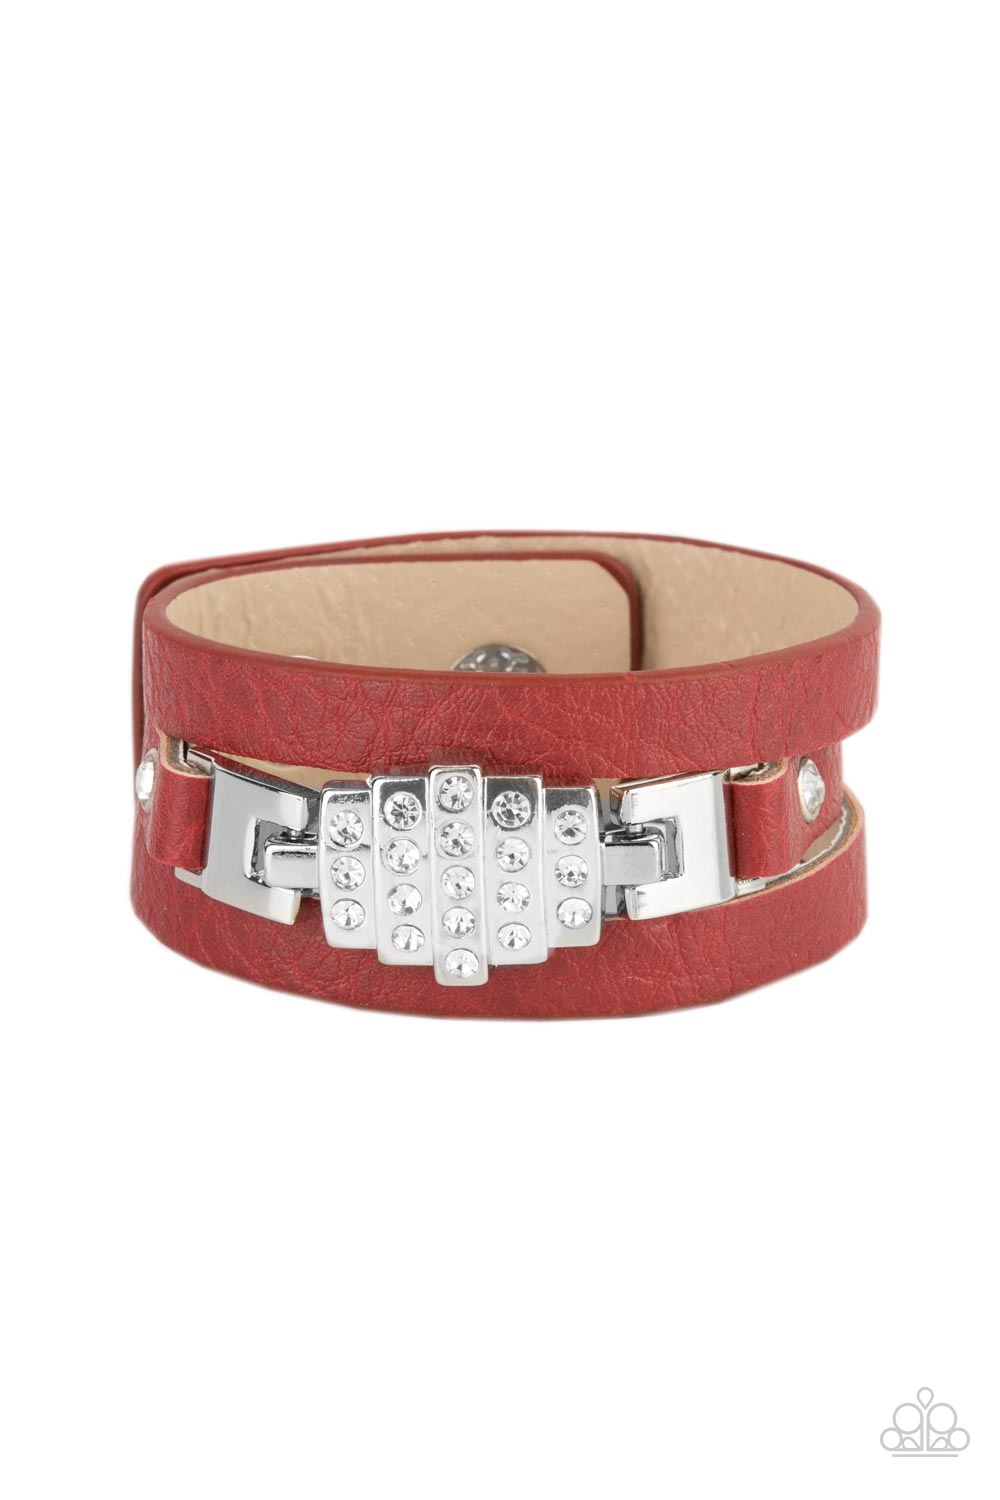 Ultra Urban - Red Bracelet - Princess Glam Shop